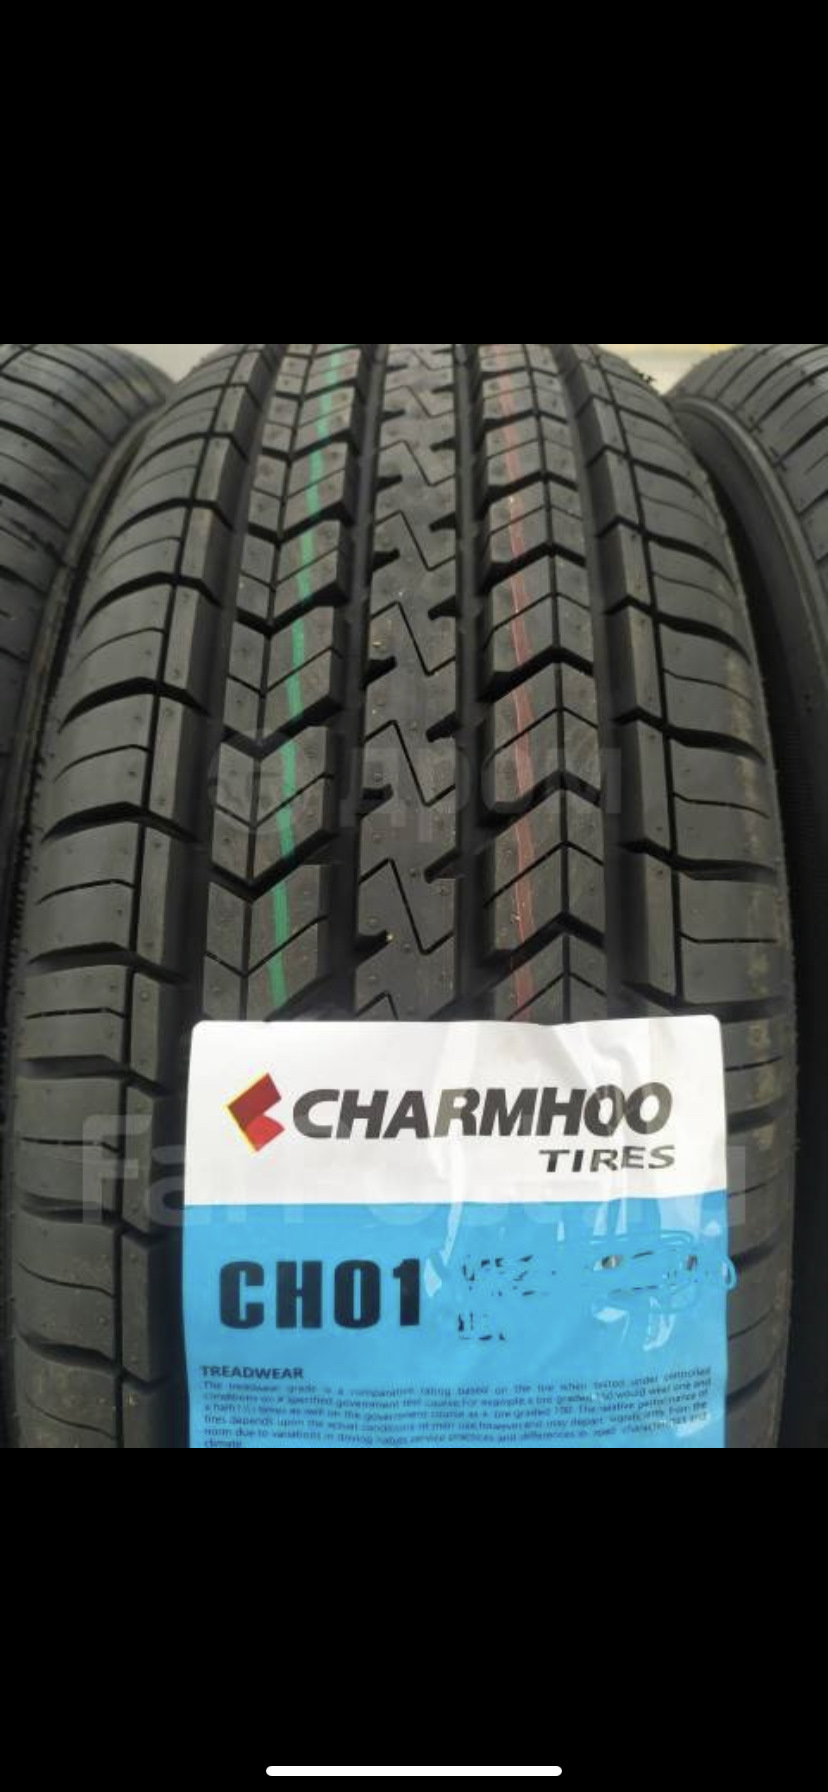 Charmhoo sport отзывы. Charmhoo ch01 Touring. 205/70r15 Charmhoo 96h ch01 Touring. Charmhoo Touring ch01 225 / 45 / r17. Шины Charmhoo ch01.